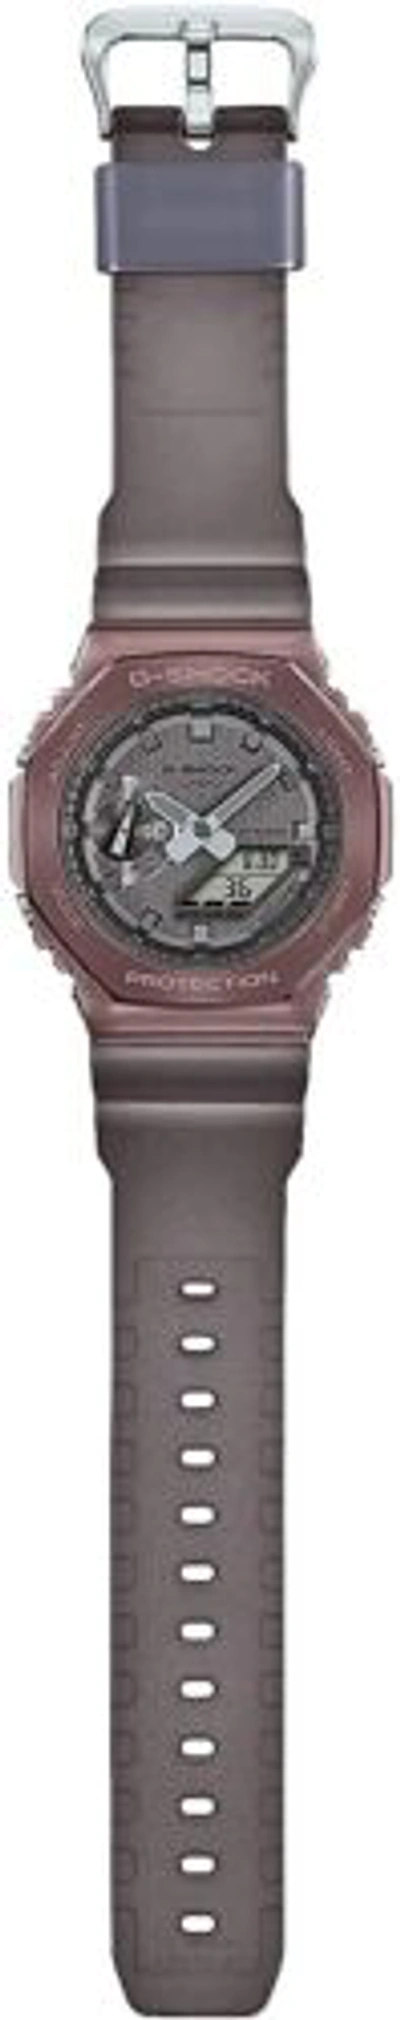 Pre-owned Casio G-shock Gm-2100mf-5ajf Midnight Fog Men's Watch Analog Digital In Box